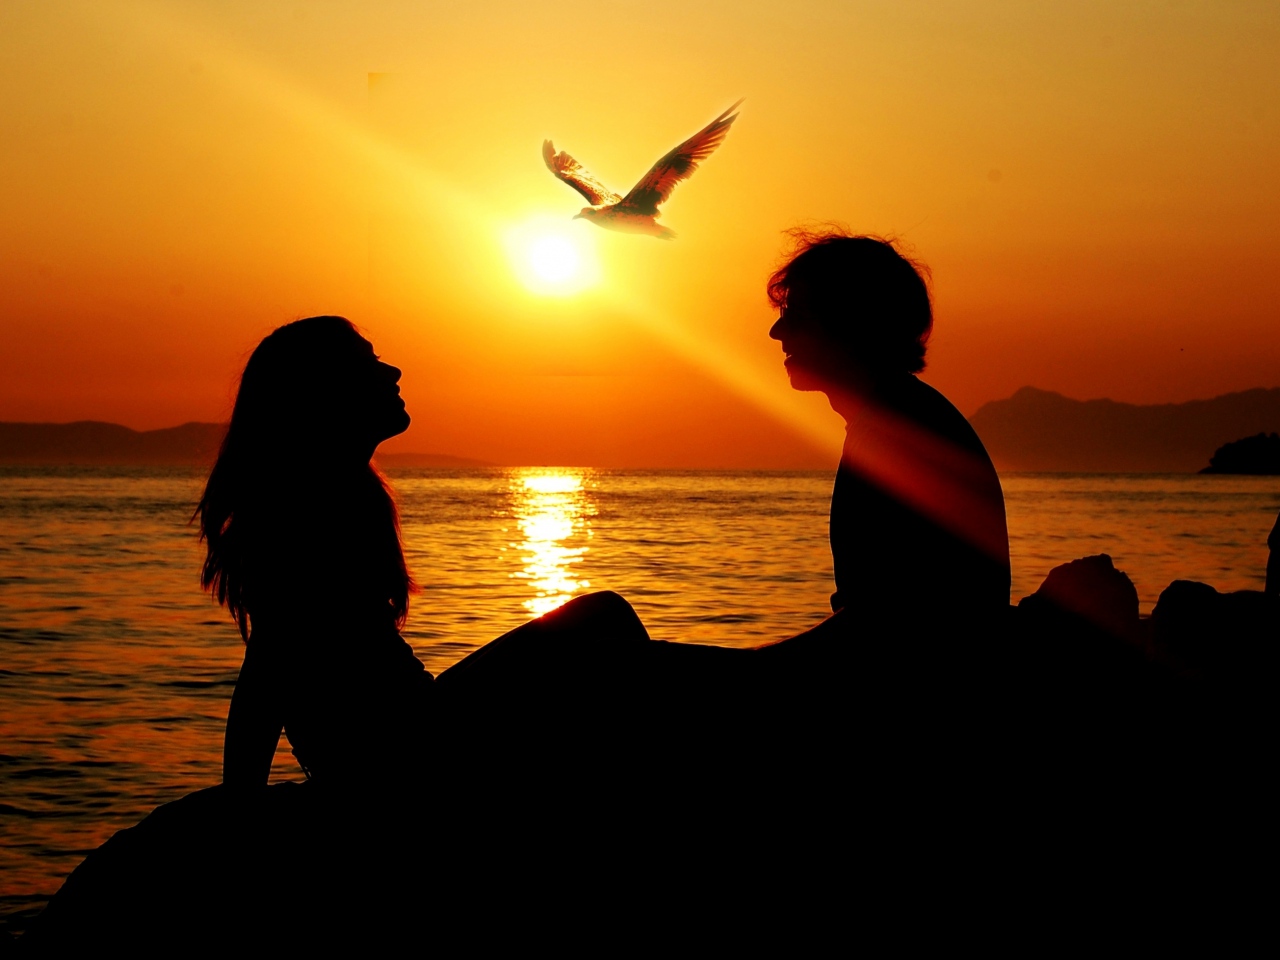 girl-sunset-summer-ray-love-sea-man-bird-freedom-silhouette-sun-sea-gull.jpg